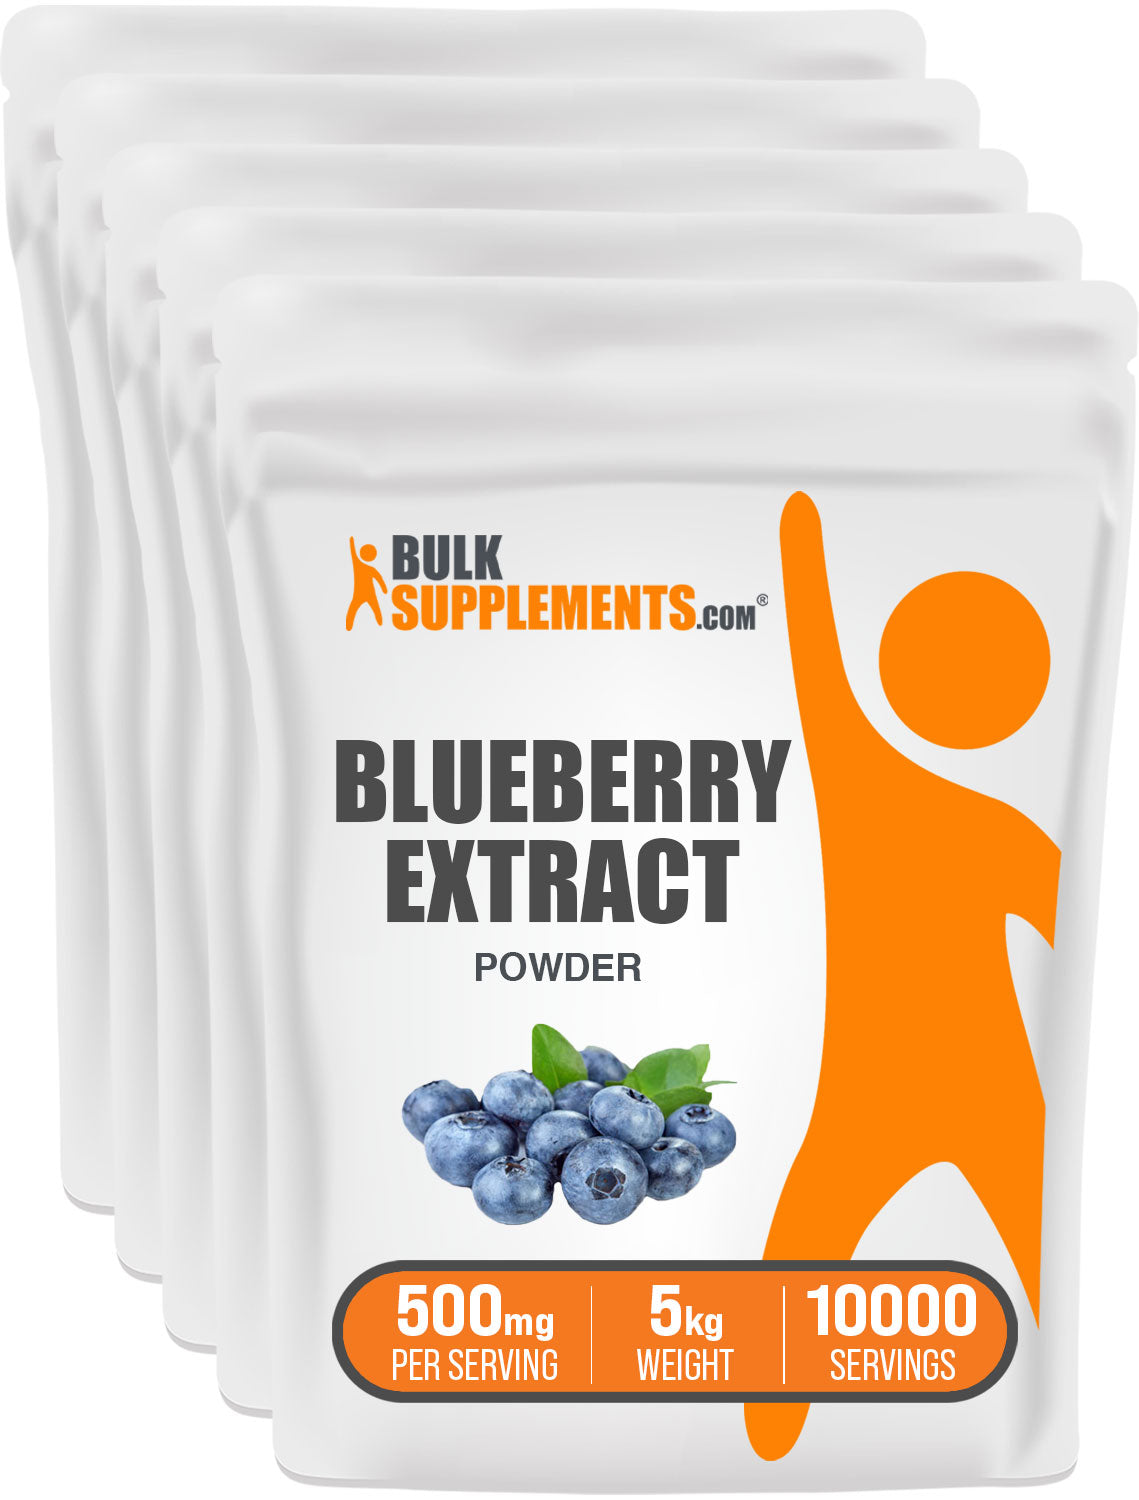 5kg of blueberry powder